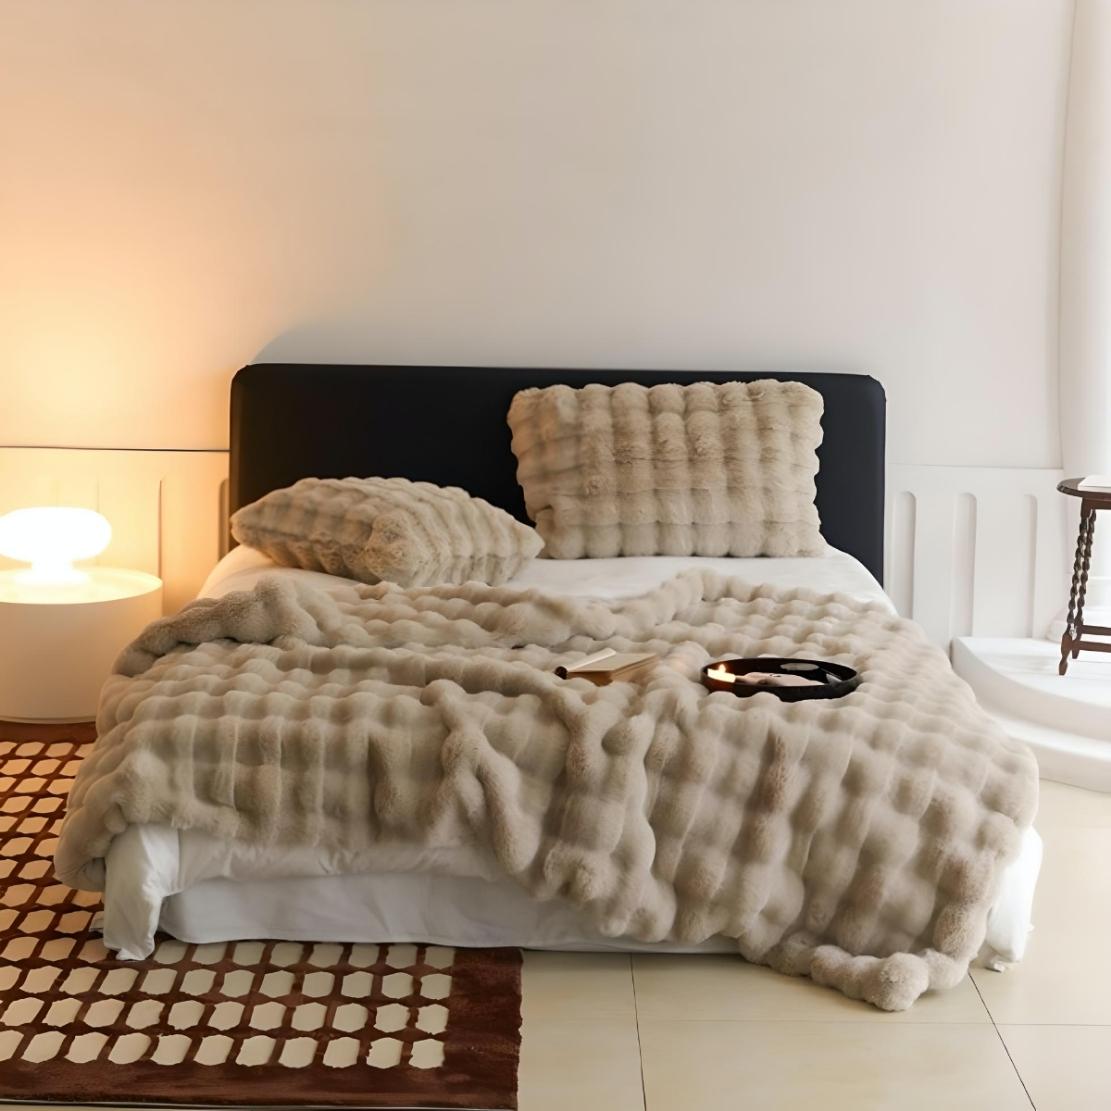 Beige fluffy soft bedding set blanket pillows